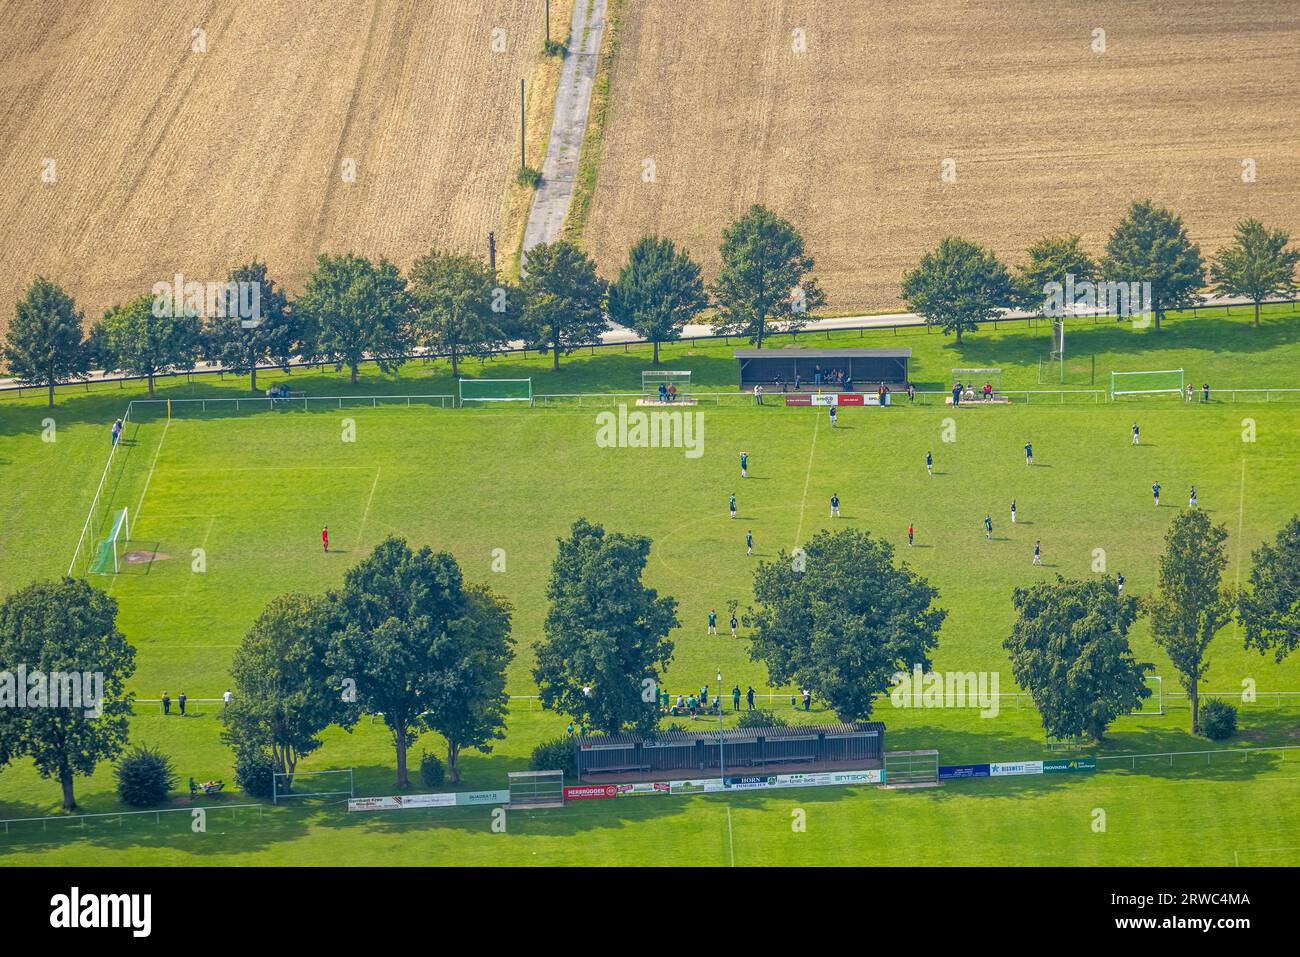 Aerial view, soccer players on the sports field SV Bausenhagen and Baumallee, Bausenhagen, Fröndenberg, Ruhr area, North Rhine-Westphalia, Germany, Tr Stock Photo